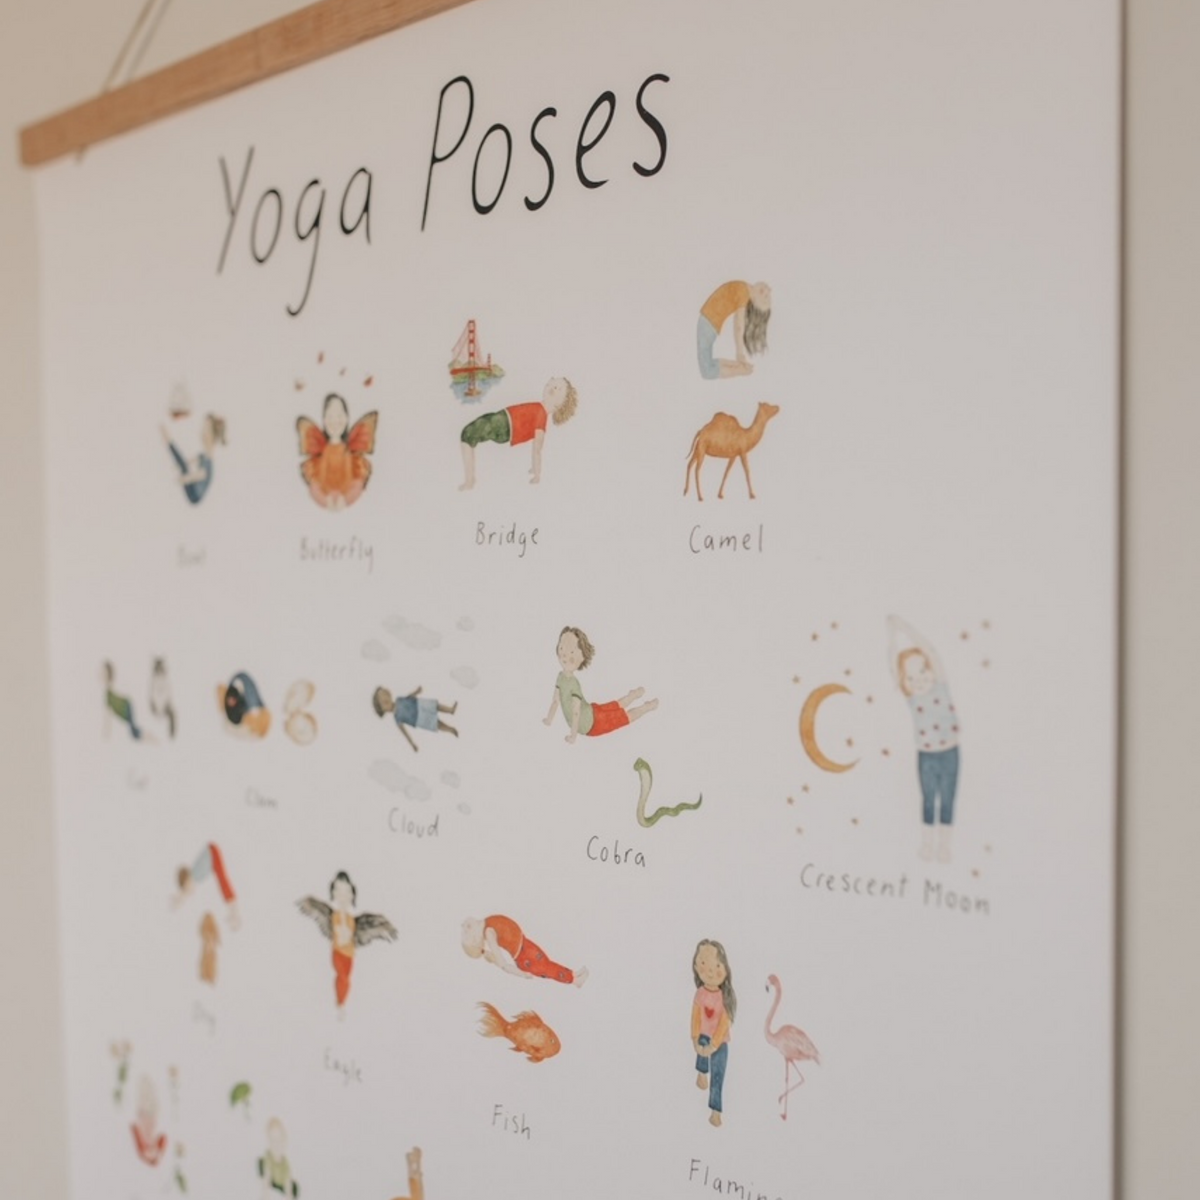 Kids Yoga Poses for Beginners - Yoga Kids ( Laminated Poster, 11.7 x 16.5  ) - Kids Yoga Poses - Yoga Children - Yoga for Kids - Yoga Wall Arts - Yoga  Poster : Kunal S: : Books